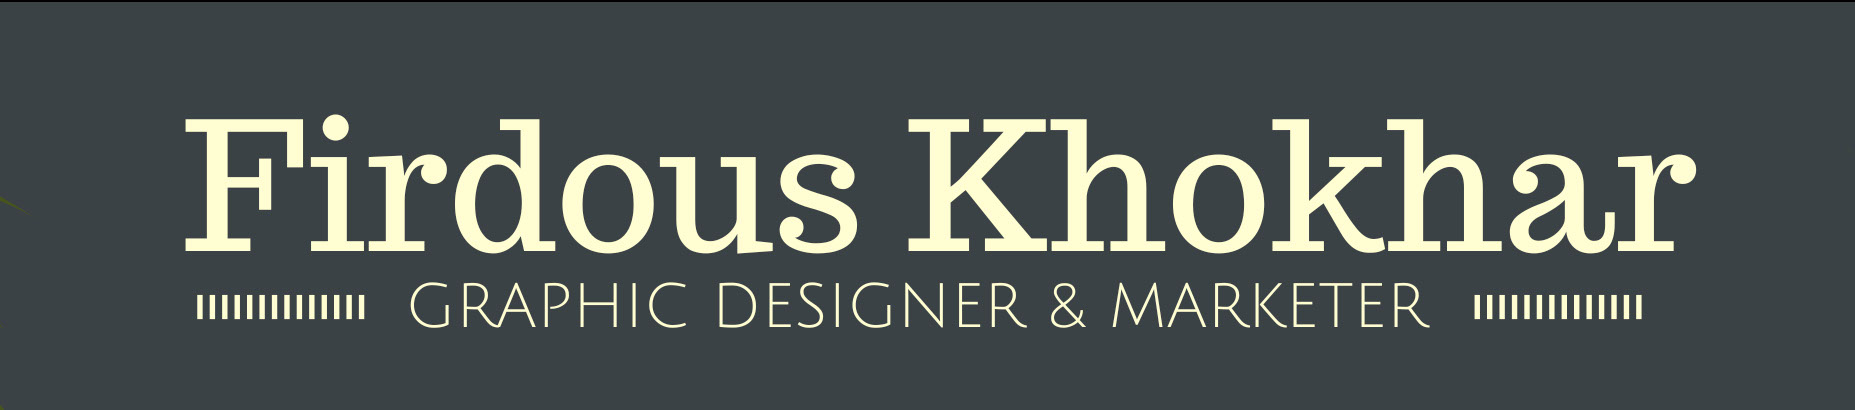 Firdous Khokhar's profile banner